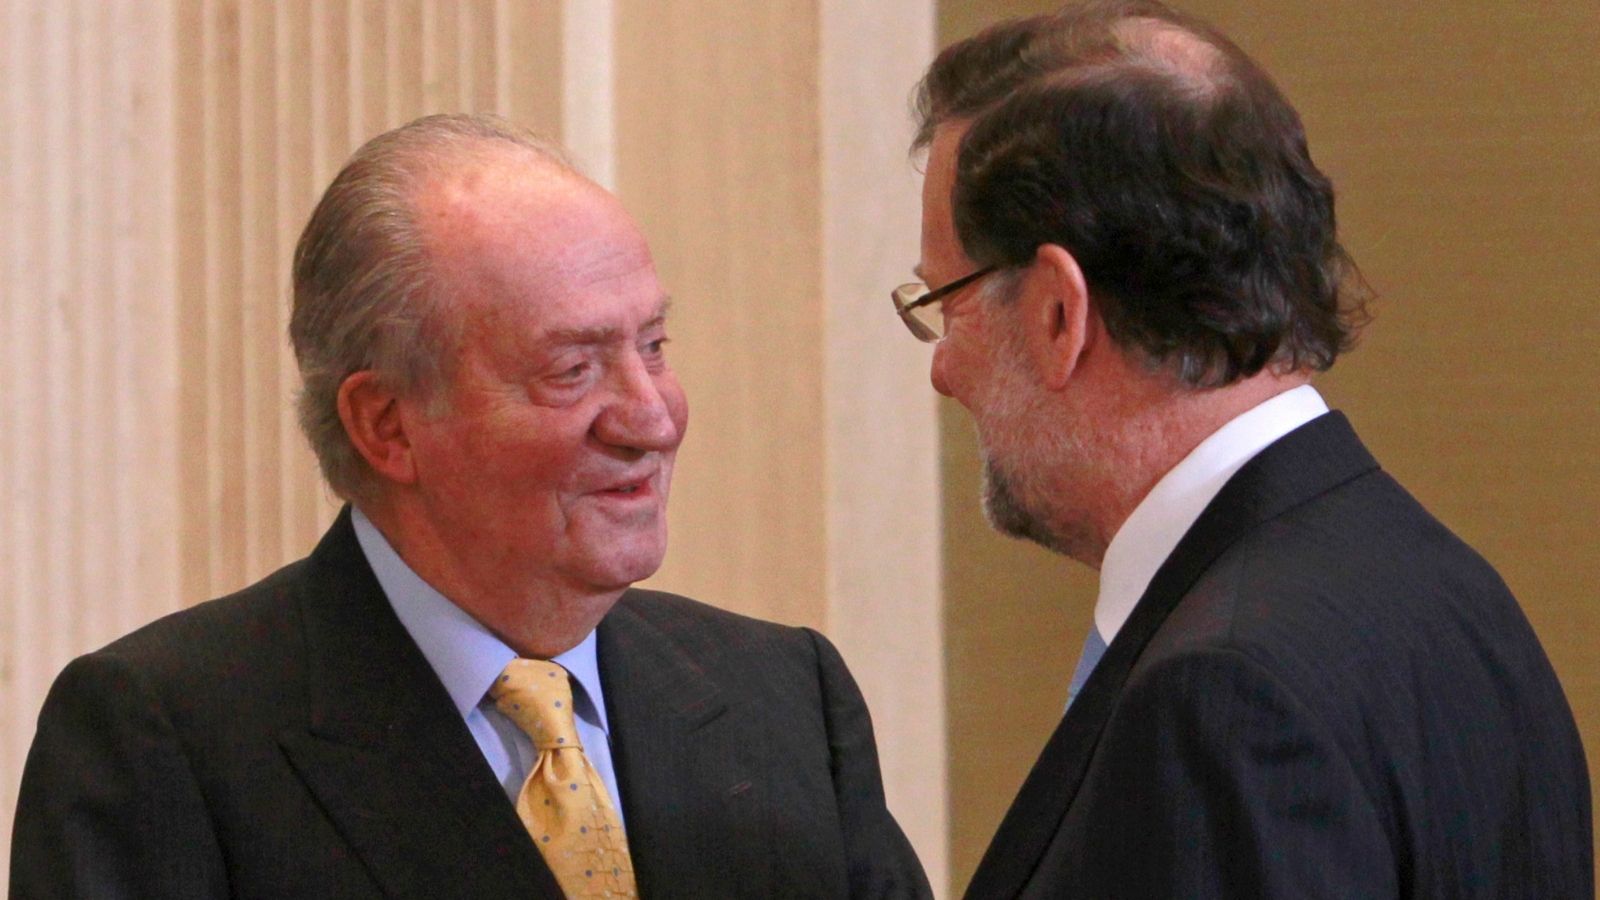 Mariano Rajoy Rey Don Juan Carlos